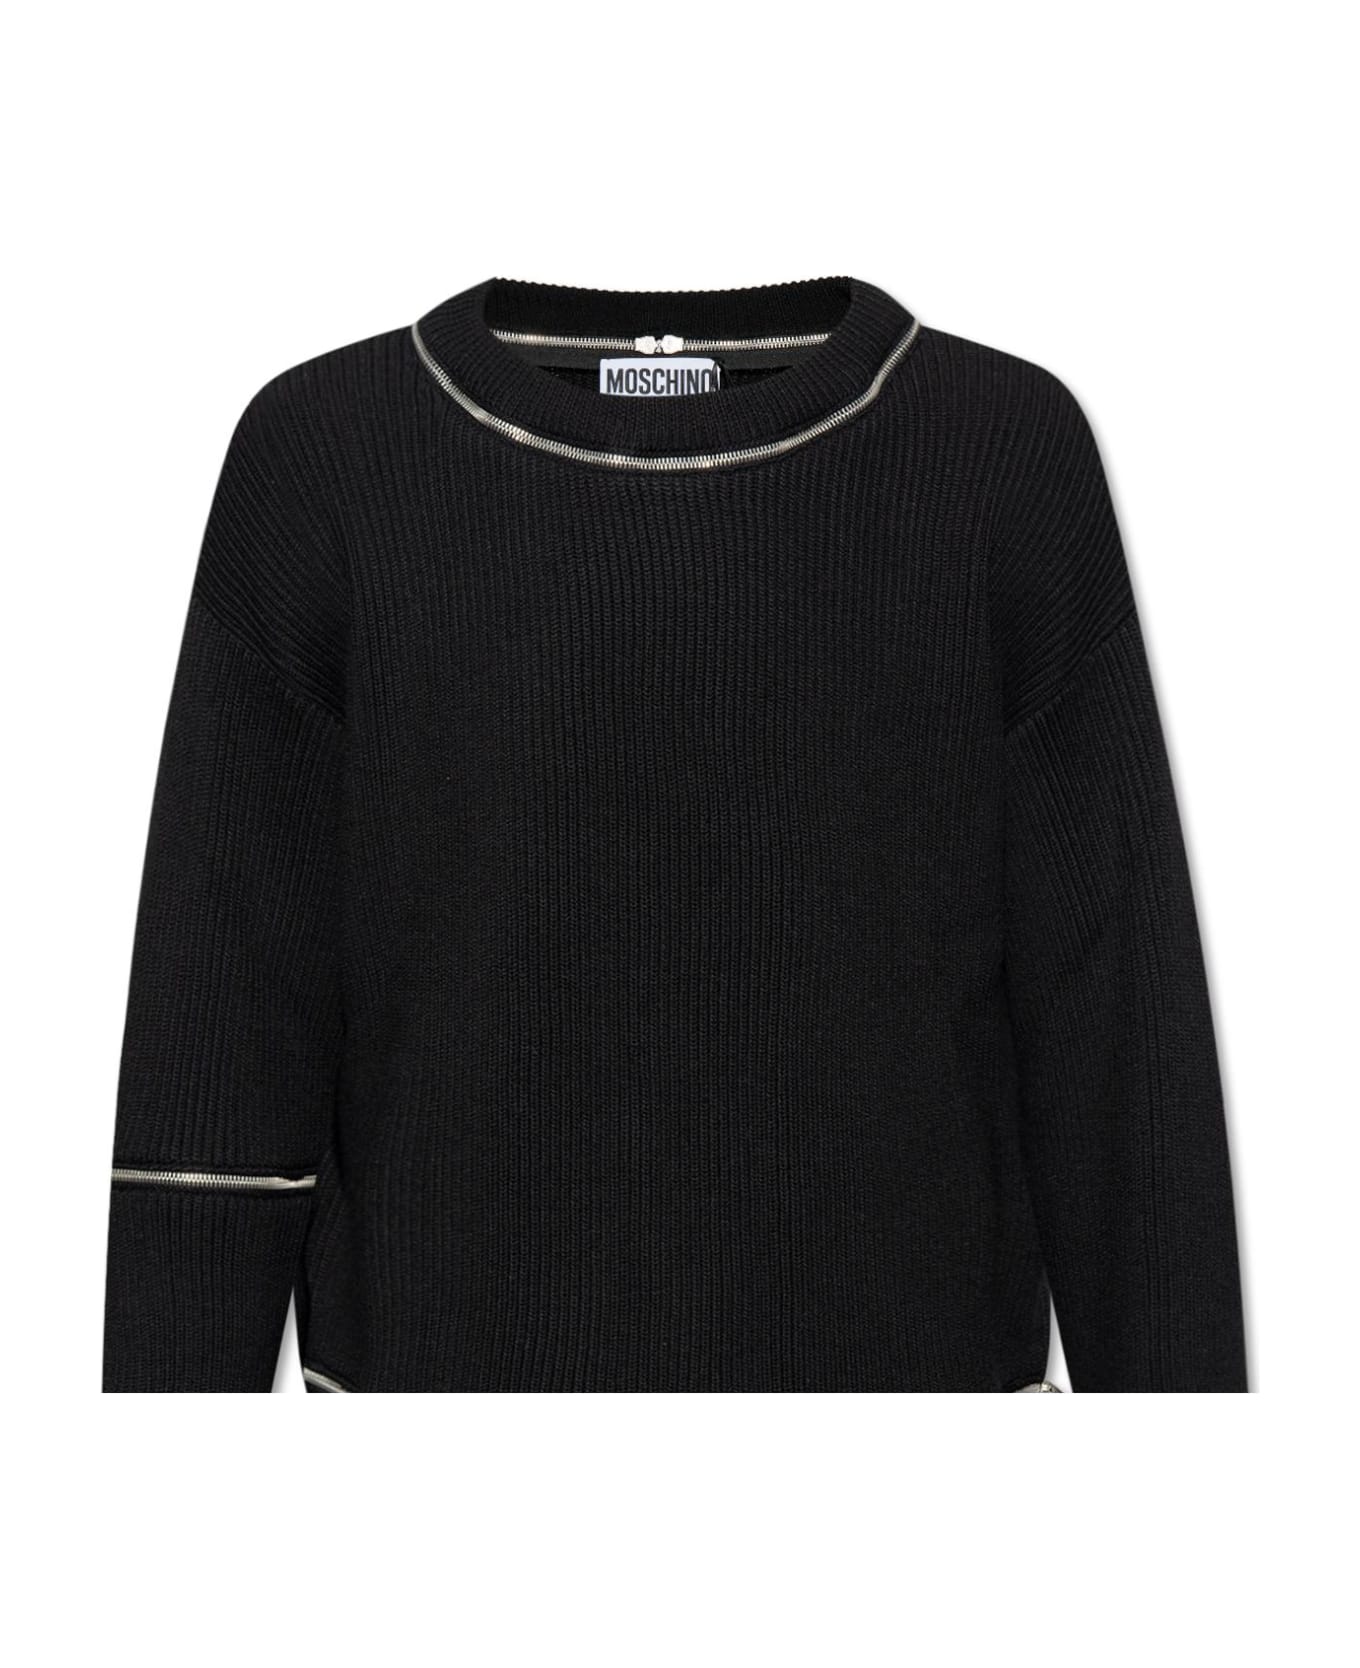 Moschino Wool Sweater With Zips - Black ニットウェア